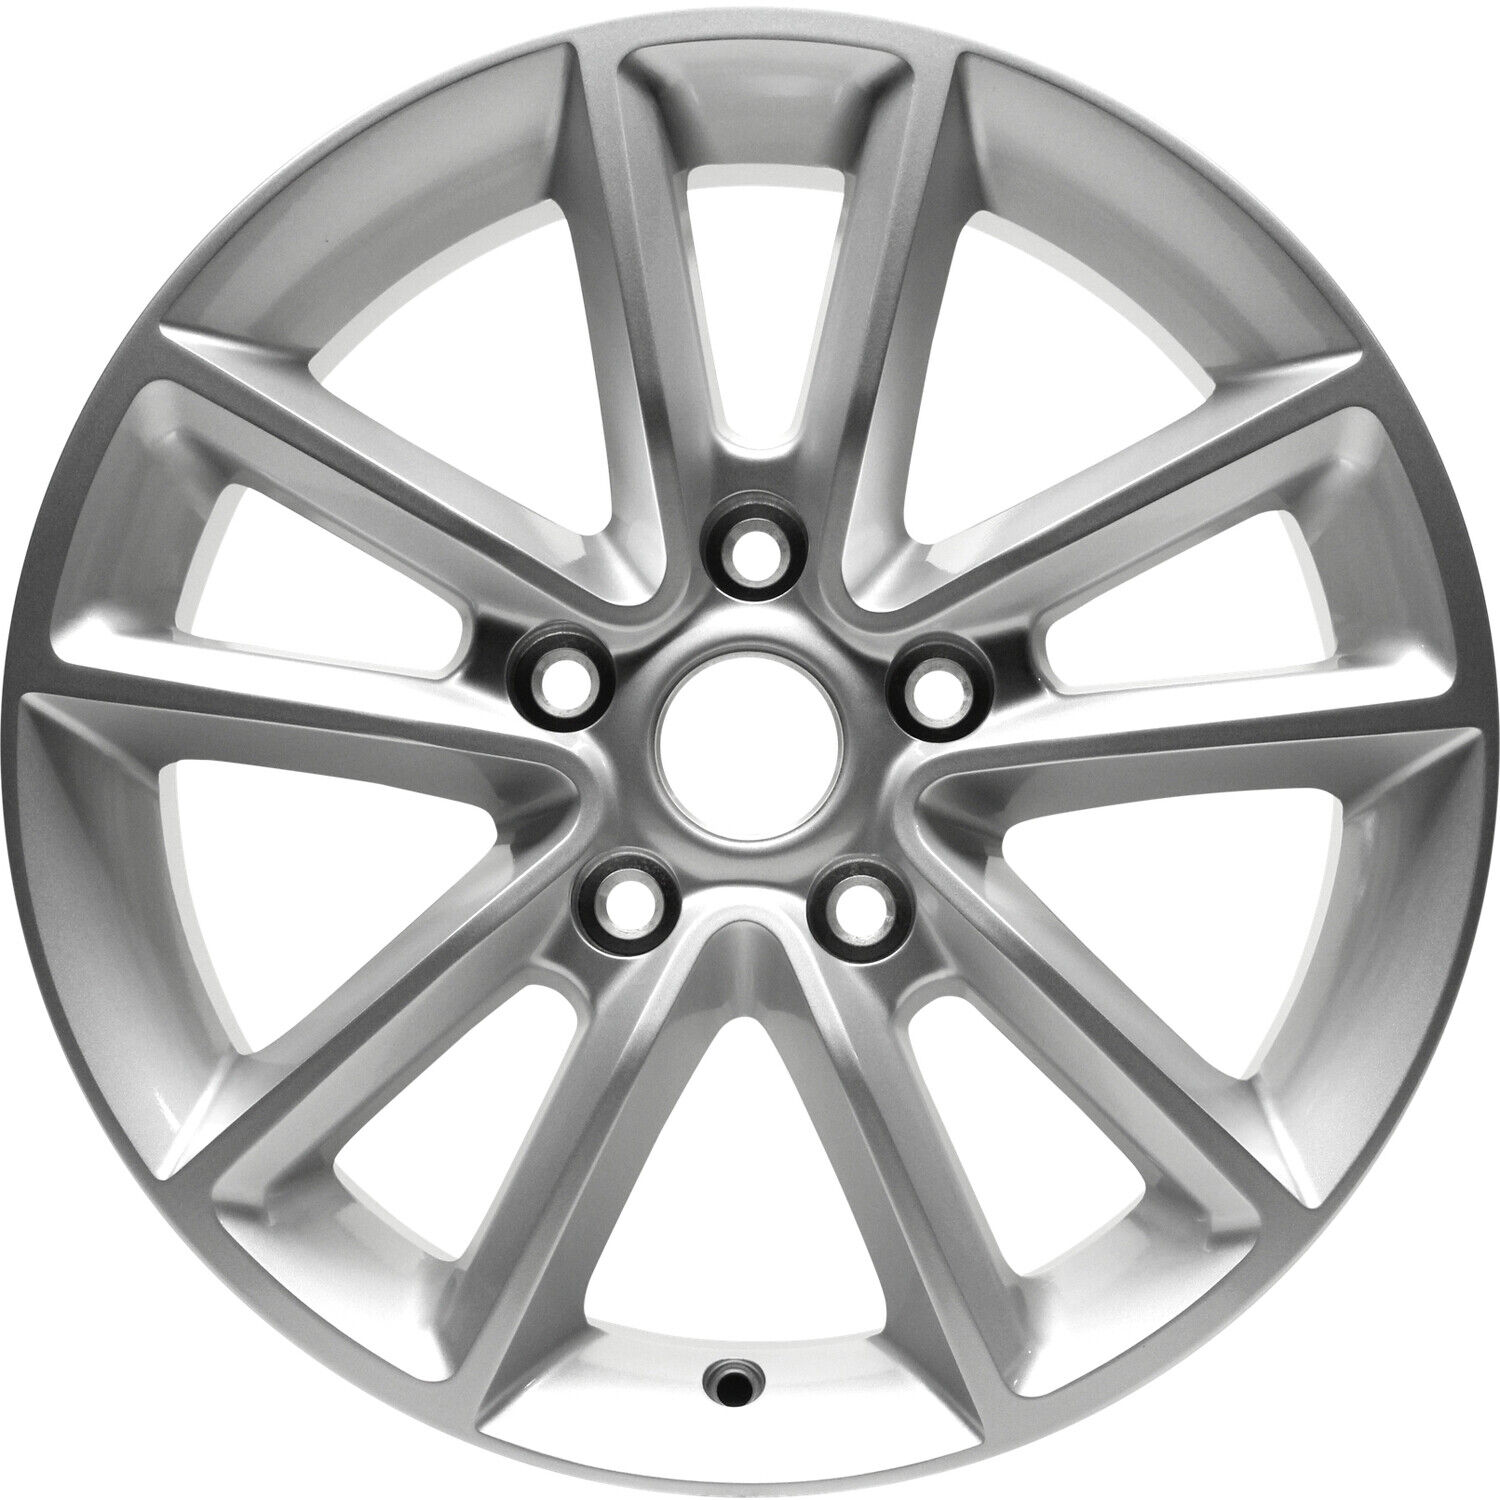 02399 Reconditioned OEM Aluminum Wheel 17x6.5 fits 2011-2020 Dodge Caravan